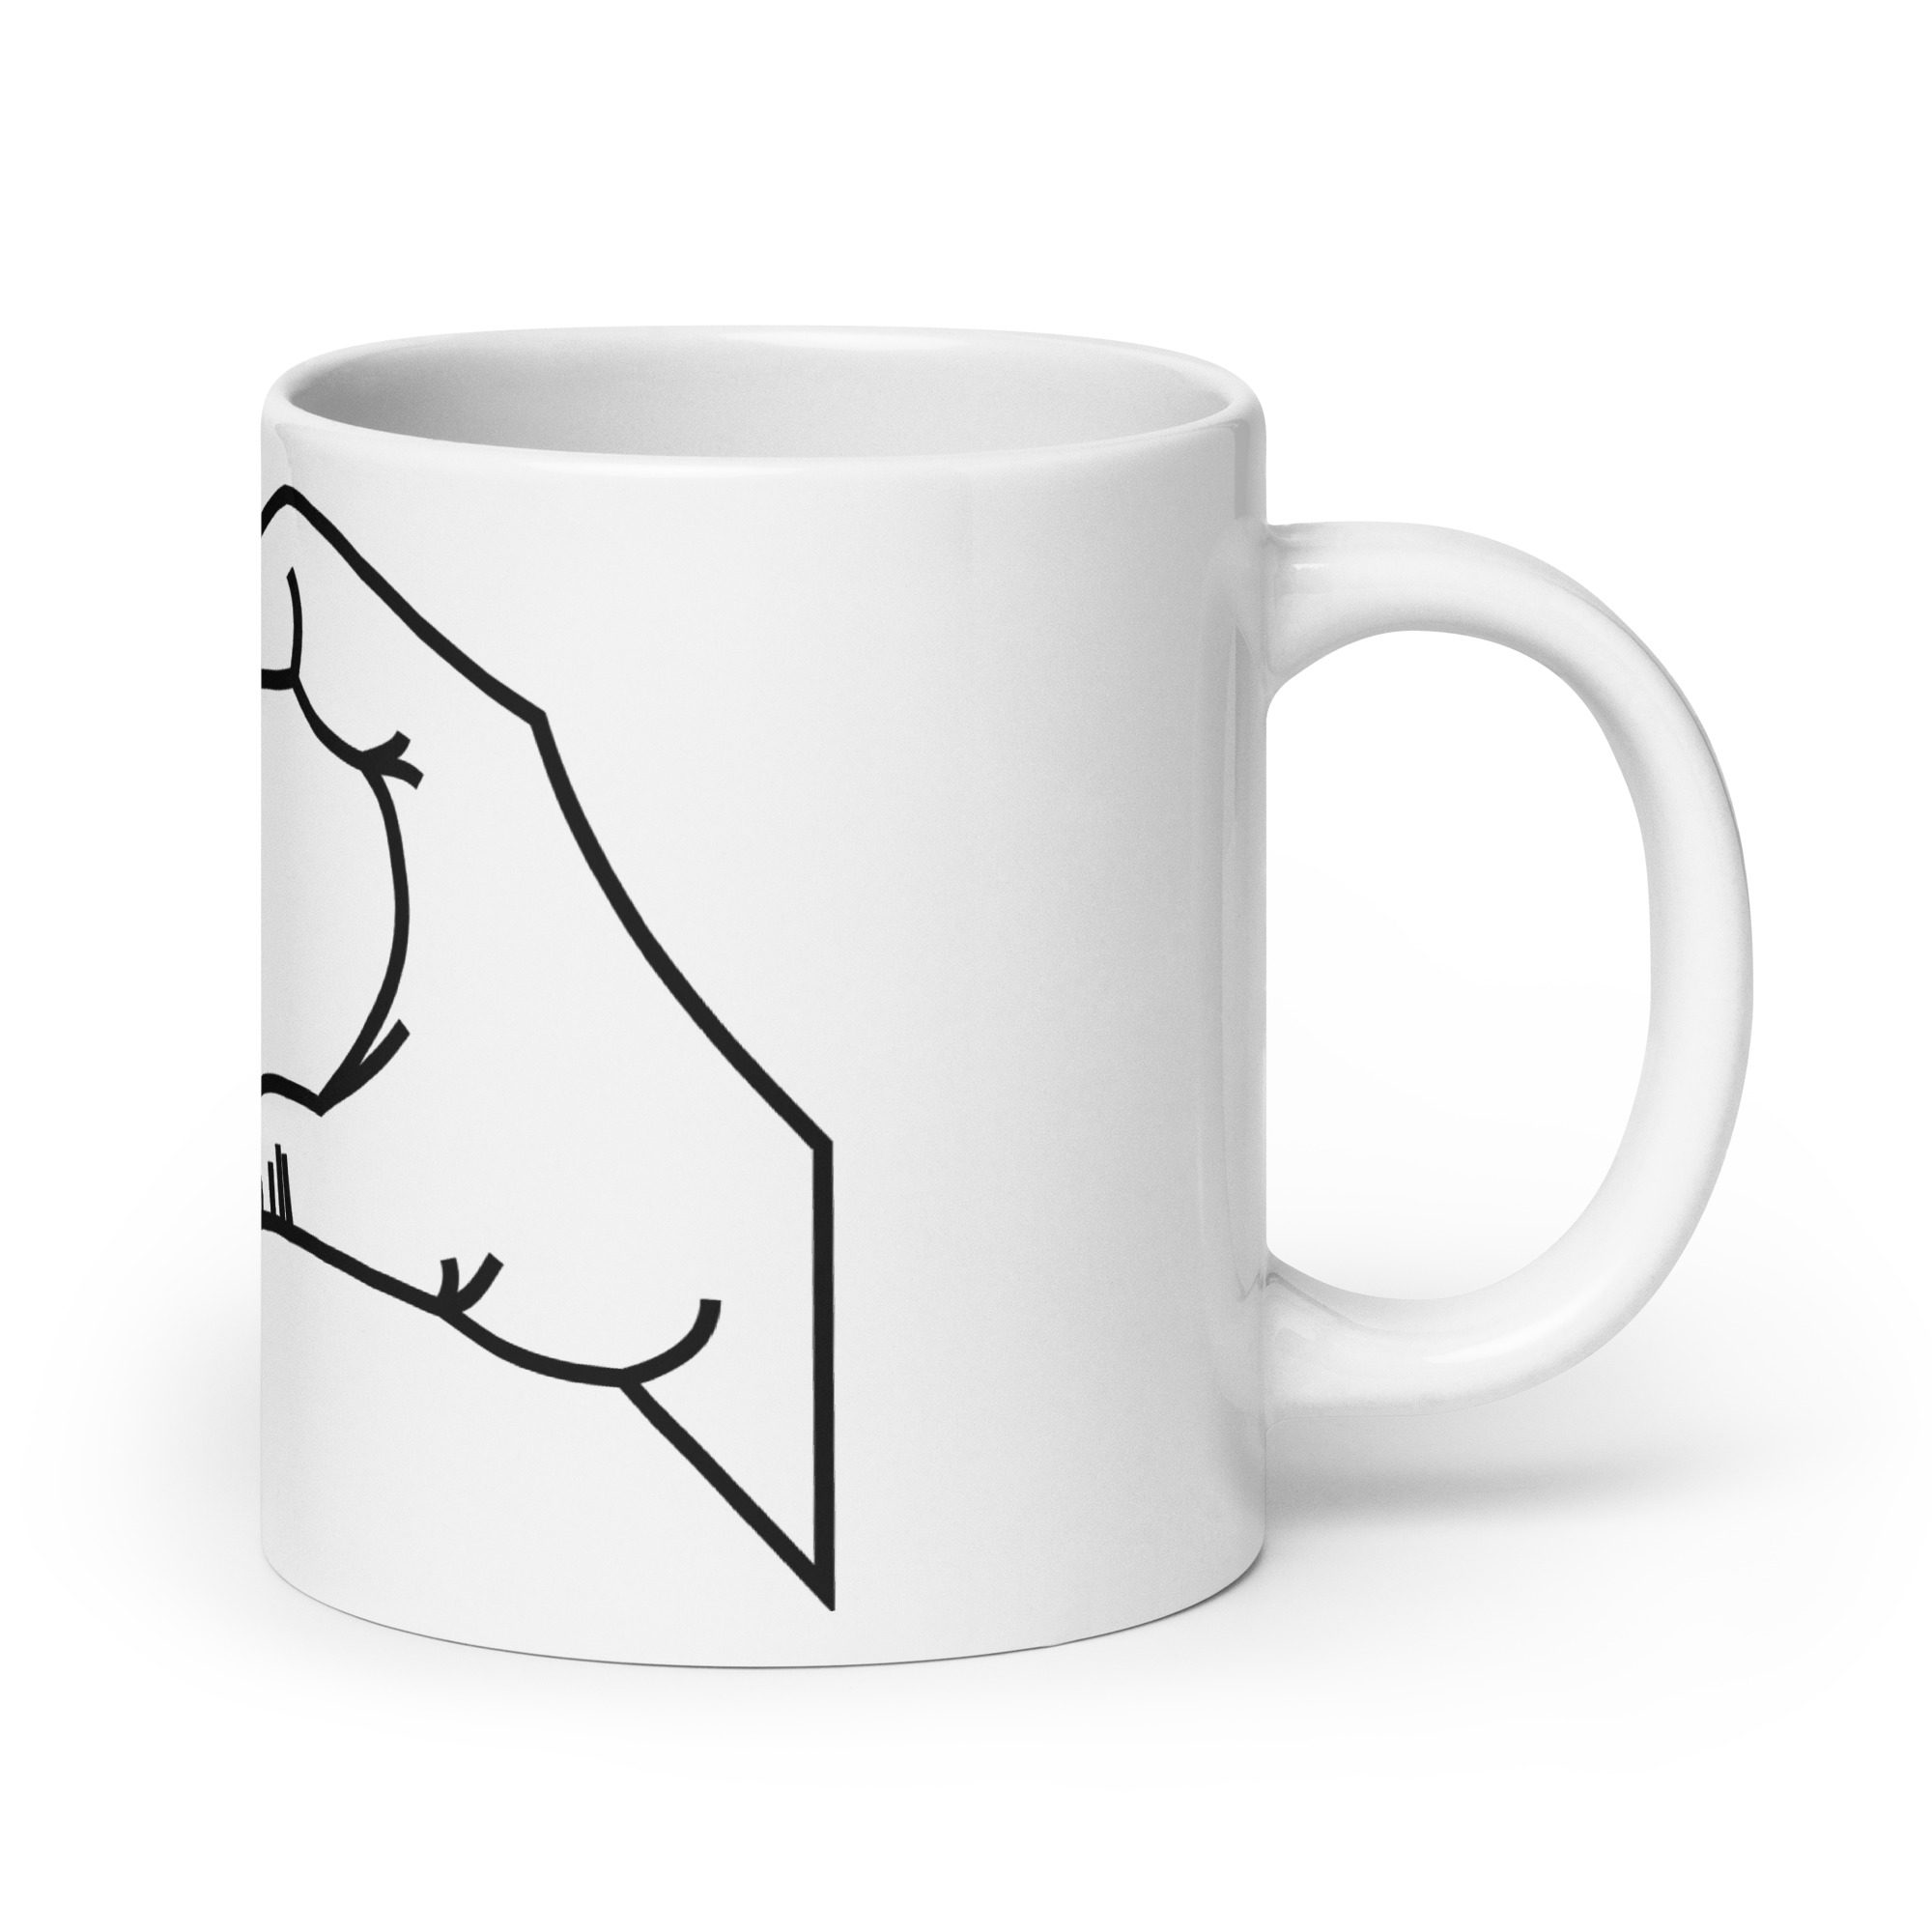 white glossy mug white 20 oz handle on right 652c0f426a861